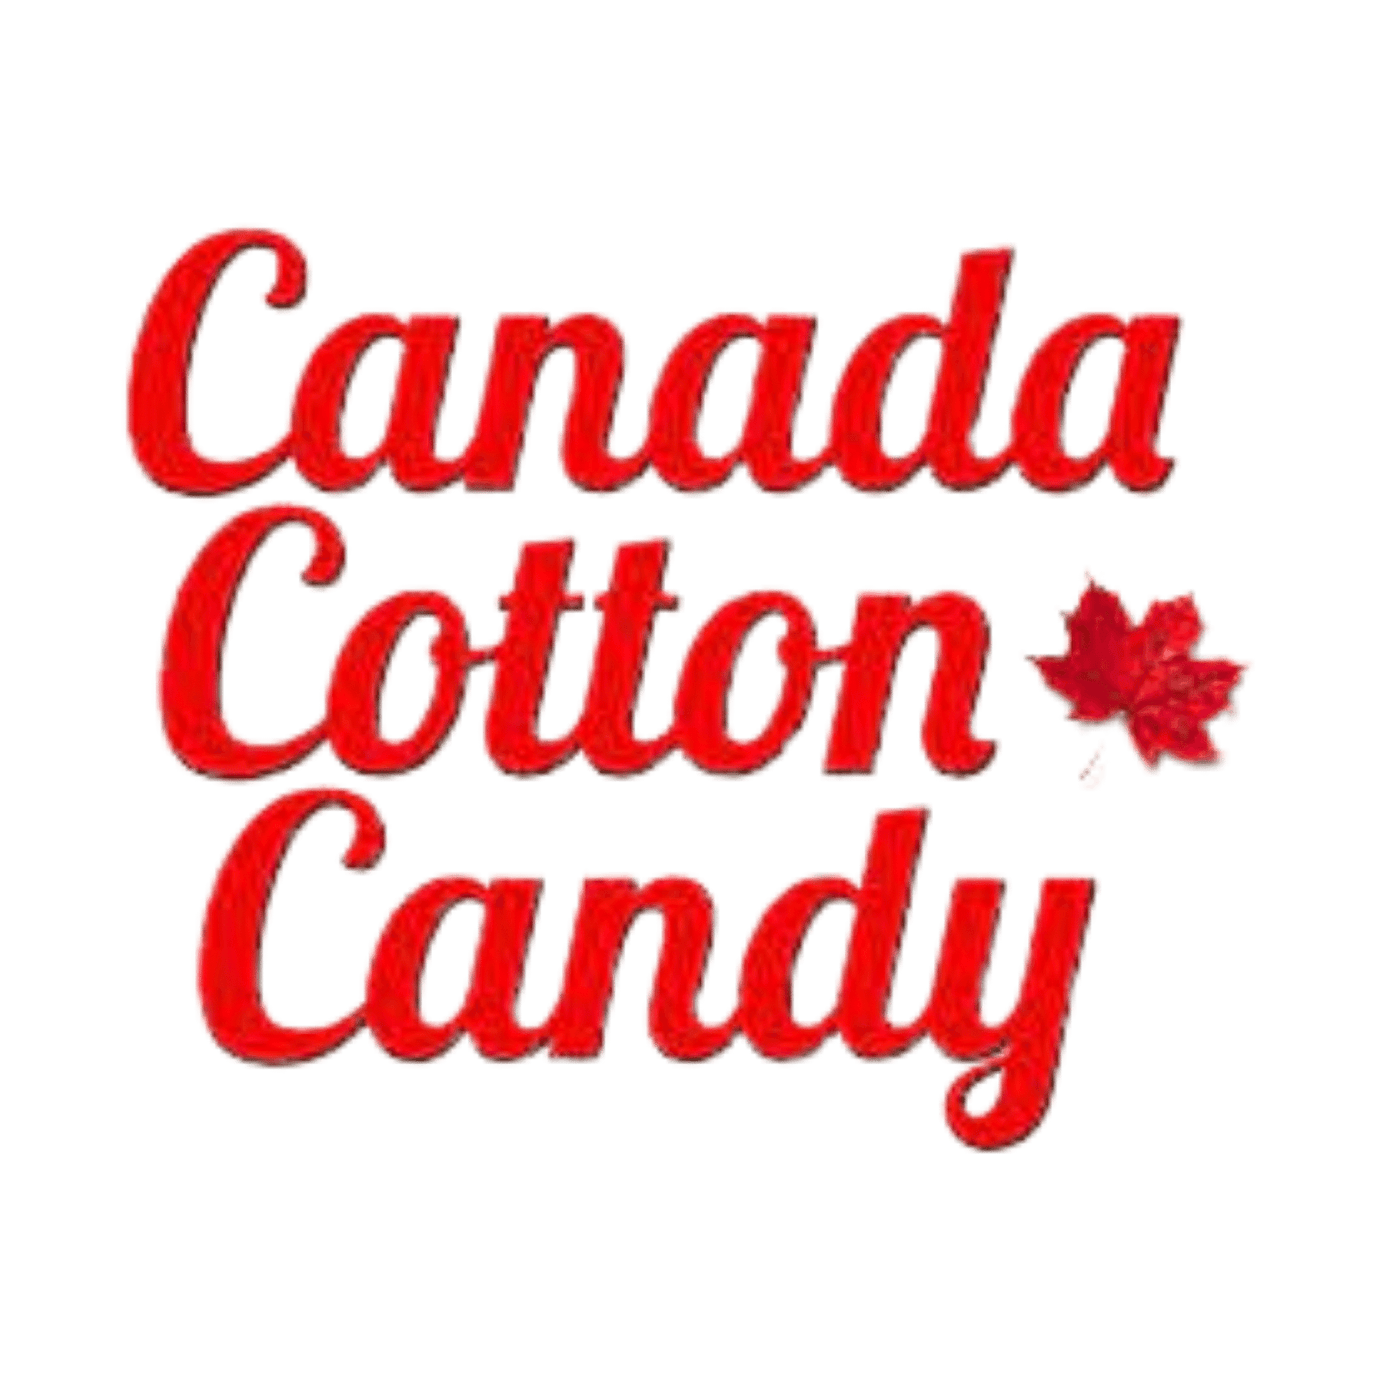 Canada Cotton Candy - Barbe à papa